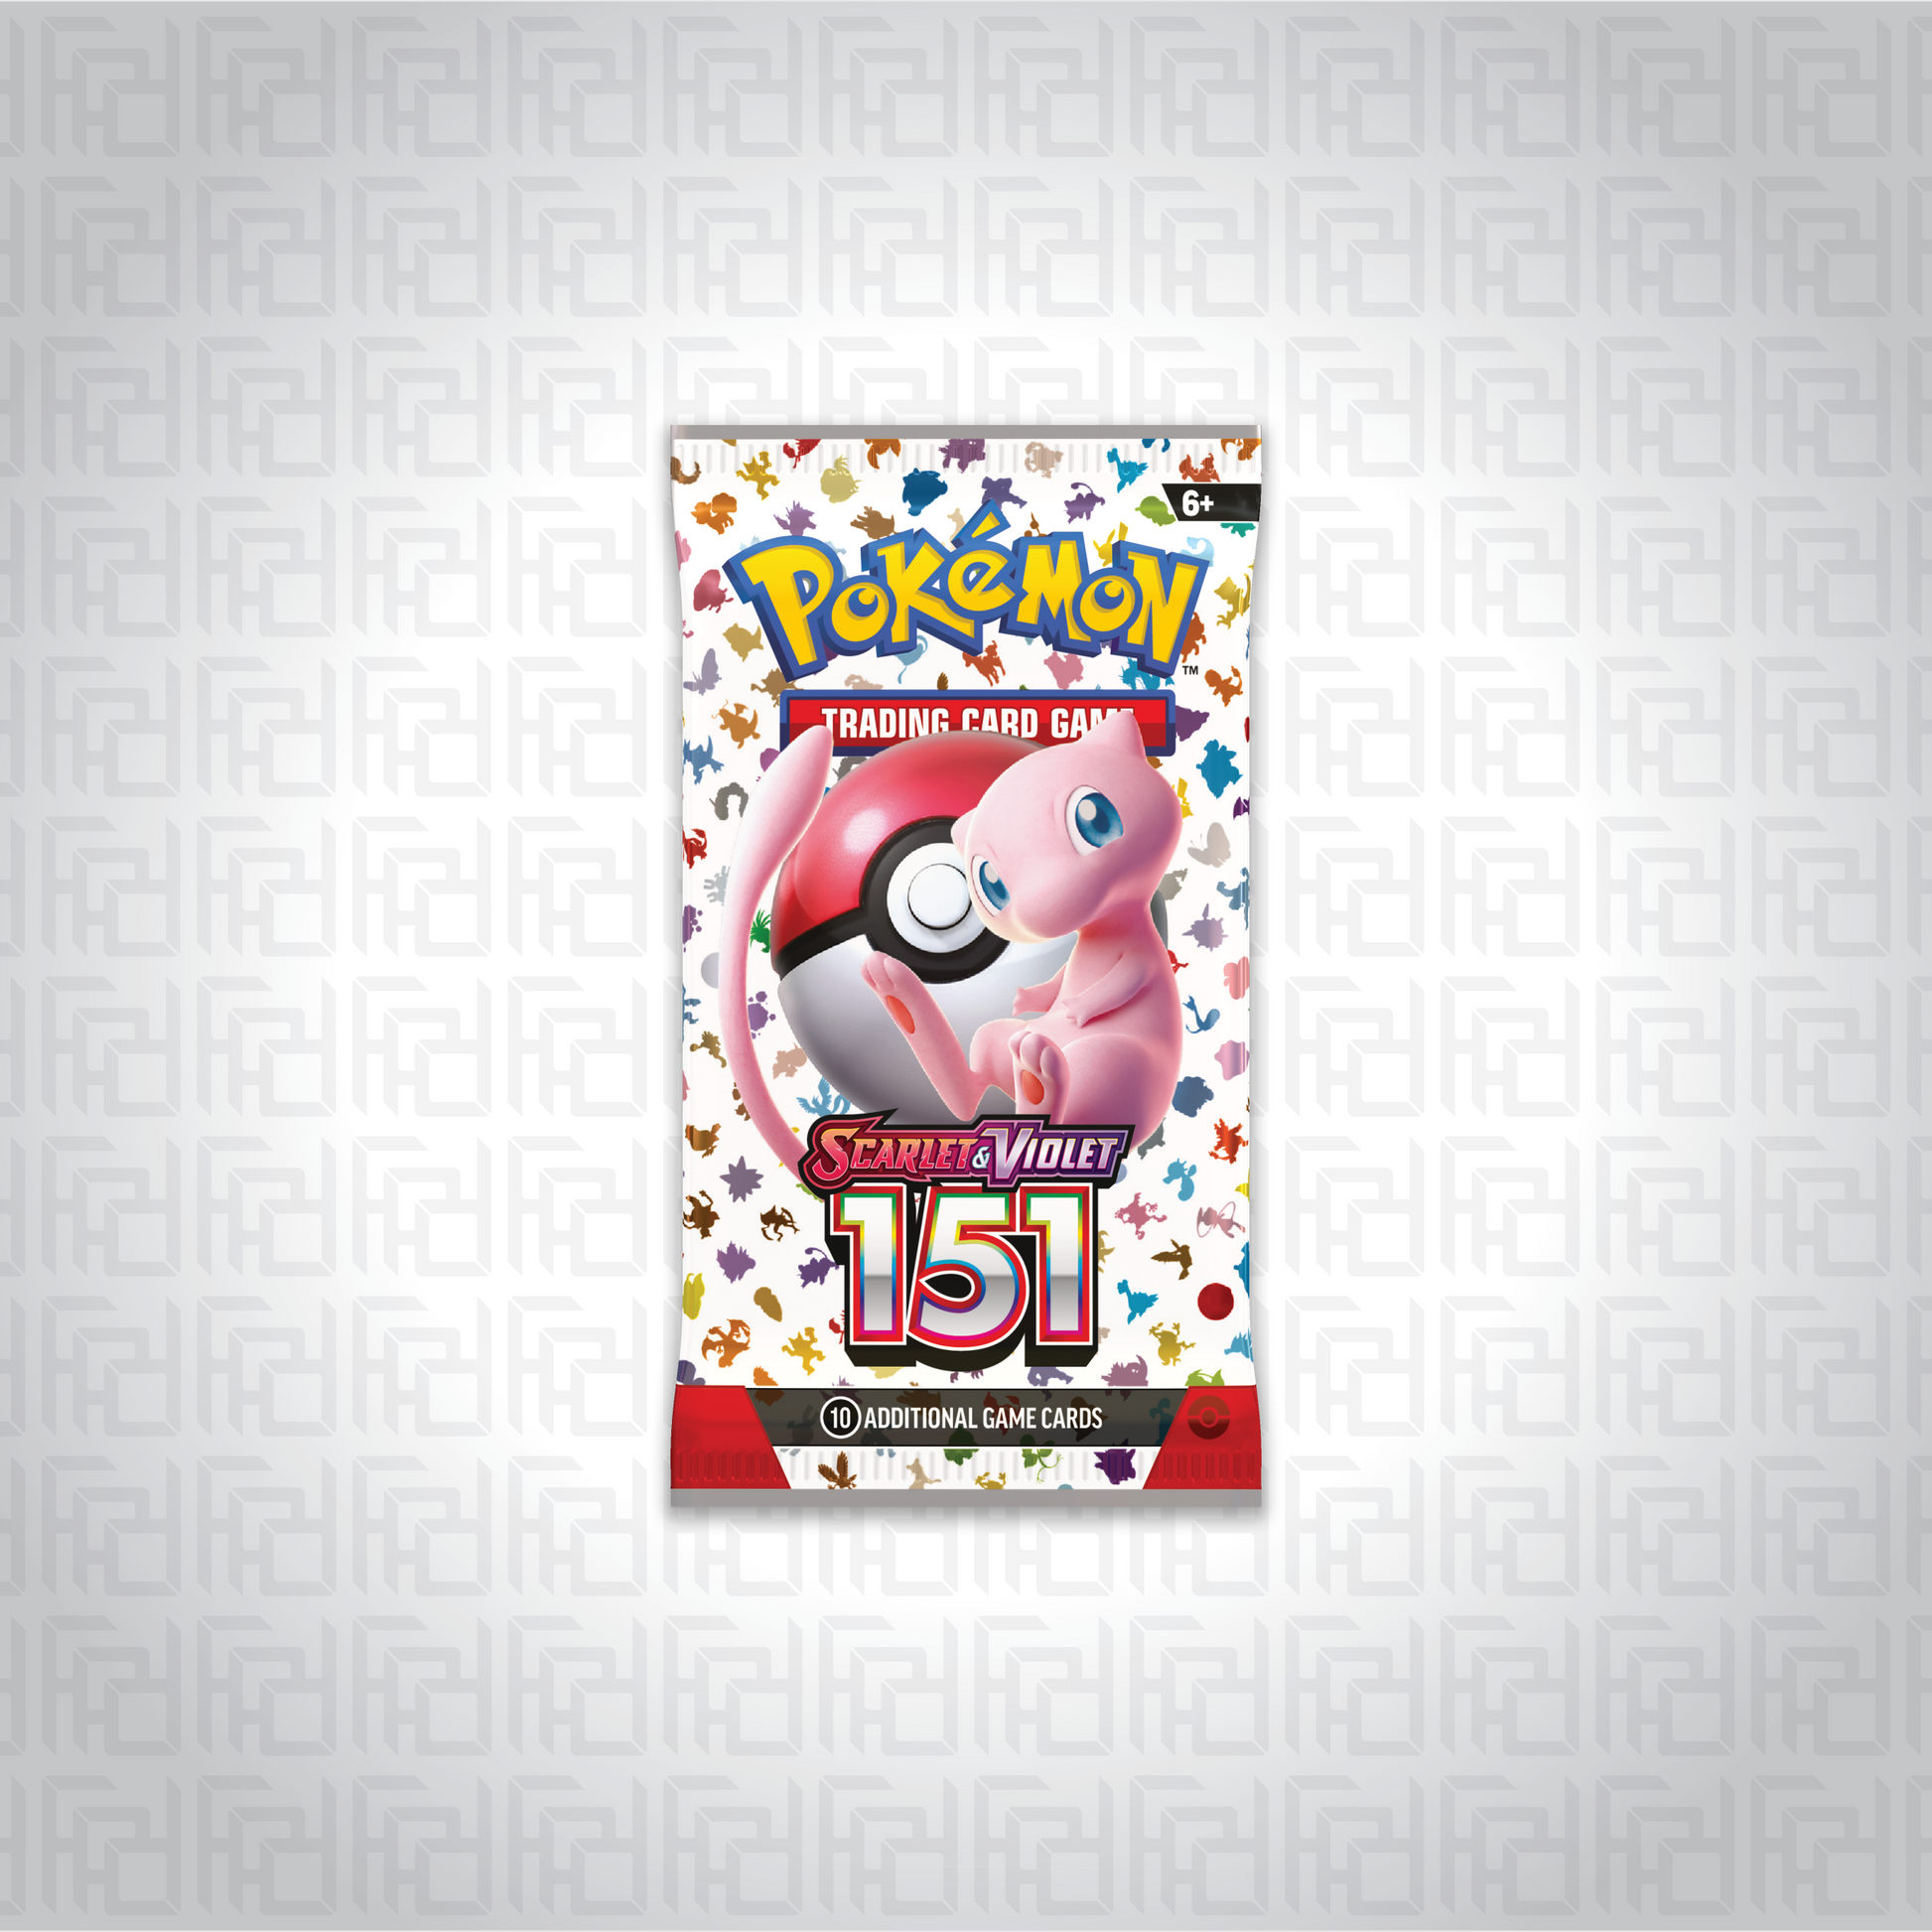 Pokemon Trading Card Game booster pack of Scarlet & Violet—151 expansion.